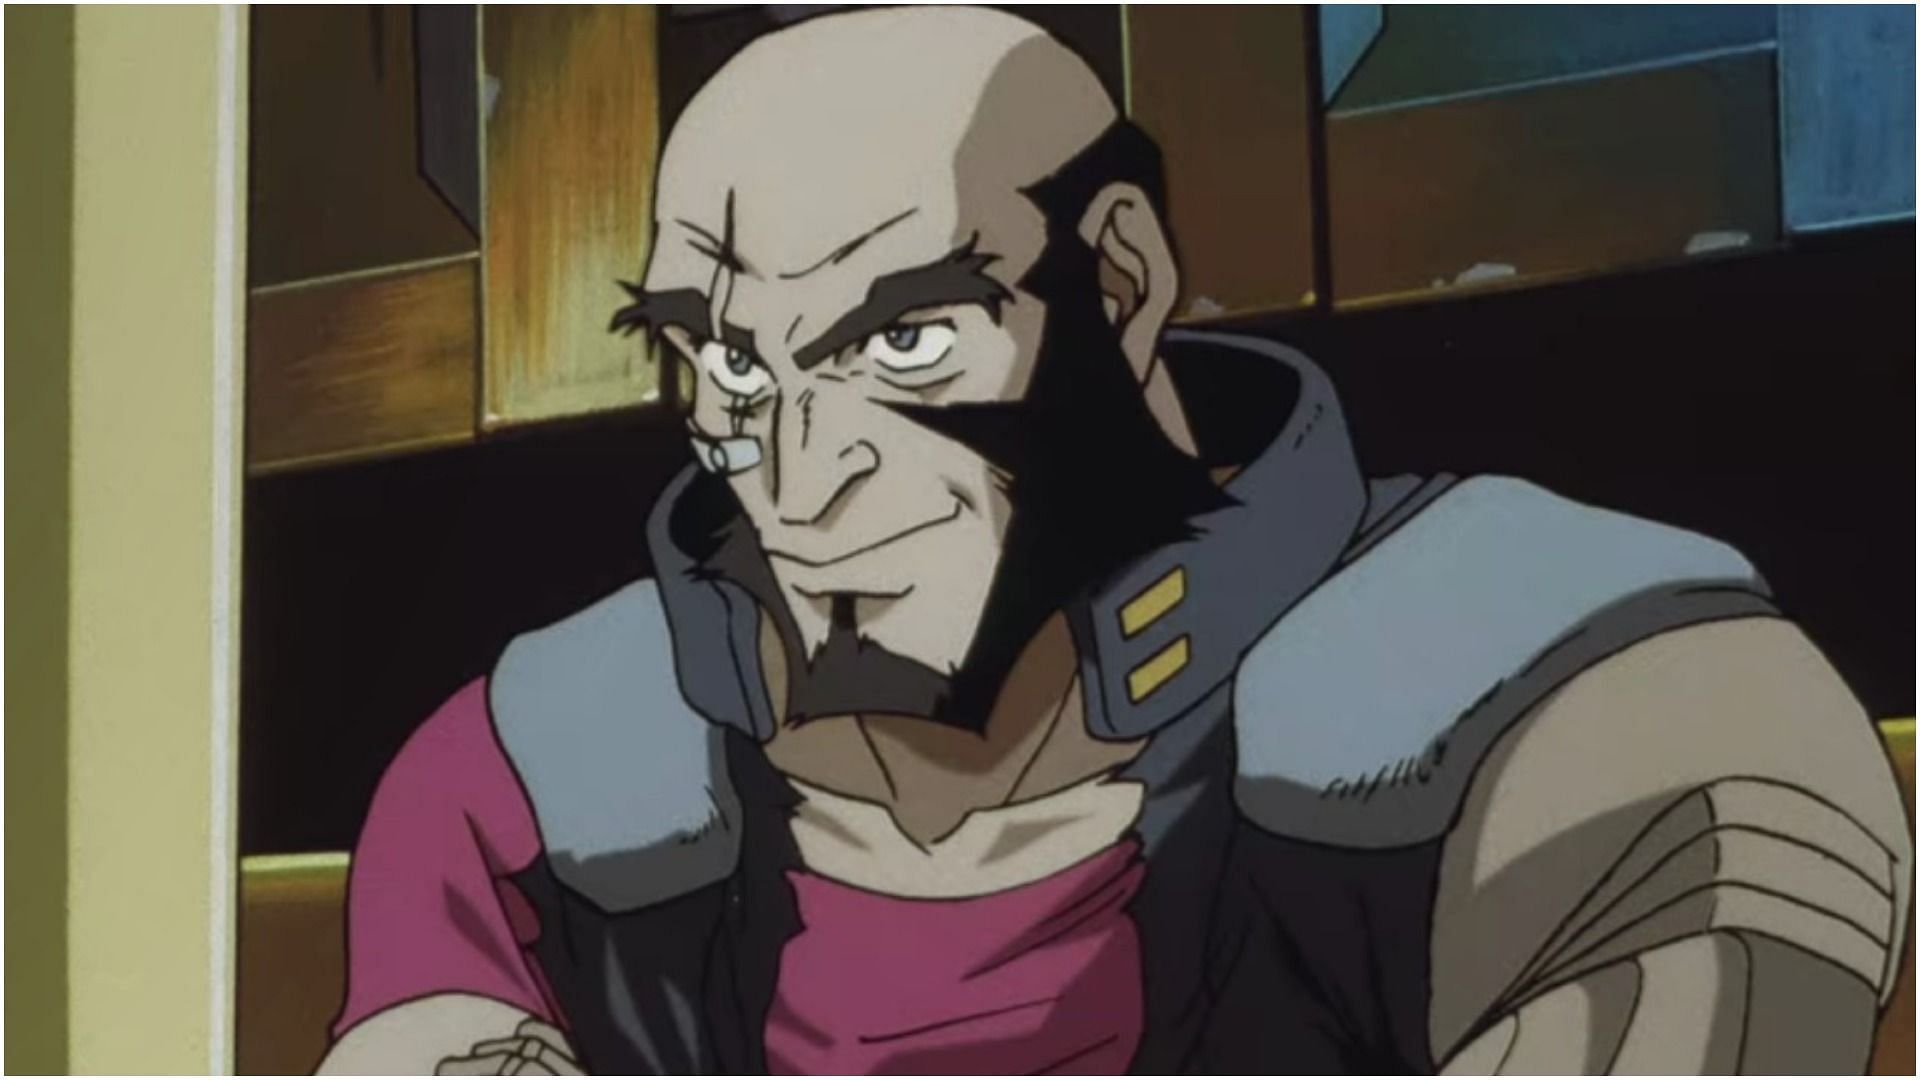 Jet Black as seen in the anime Cowboy Bebop (Image via Studio Sunrise)